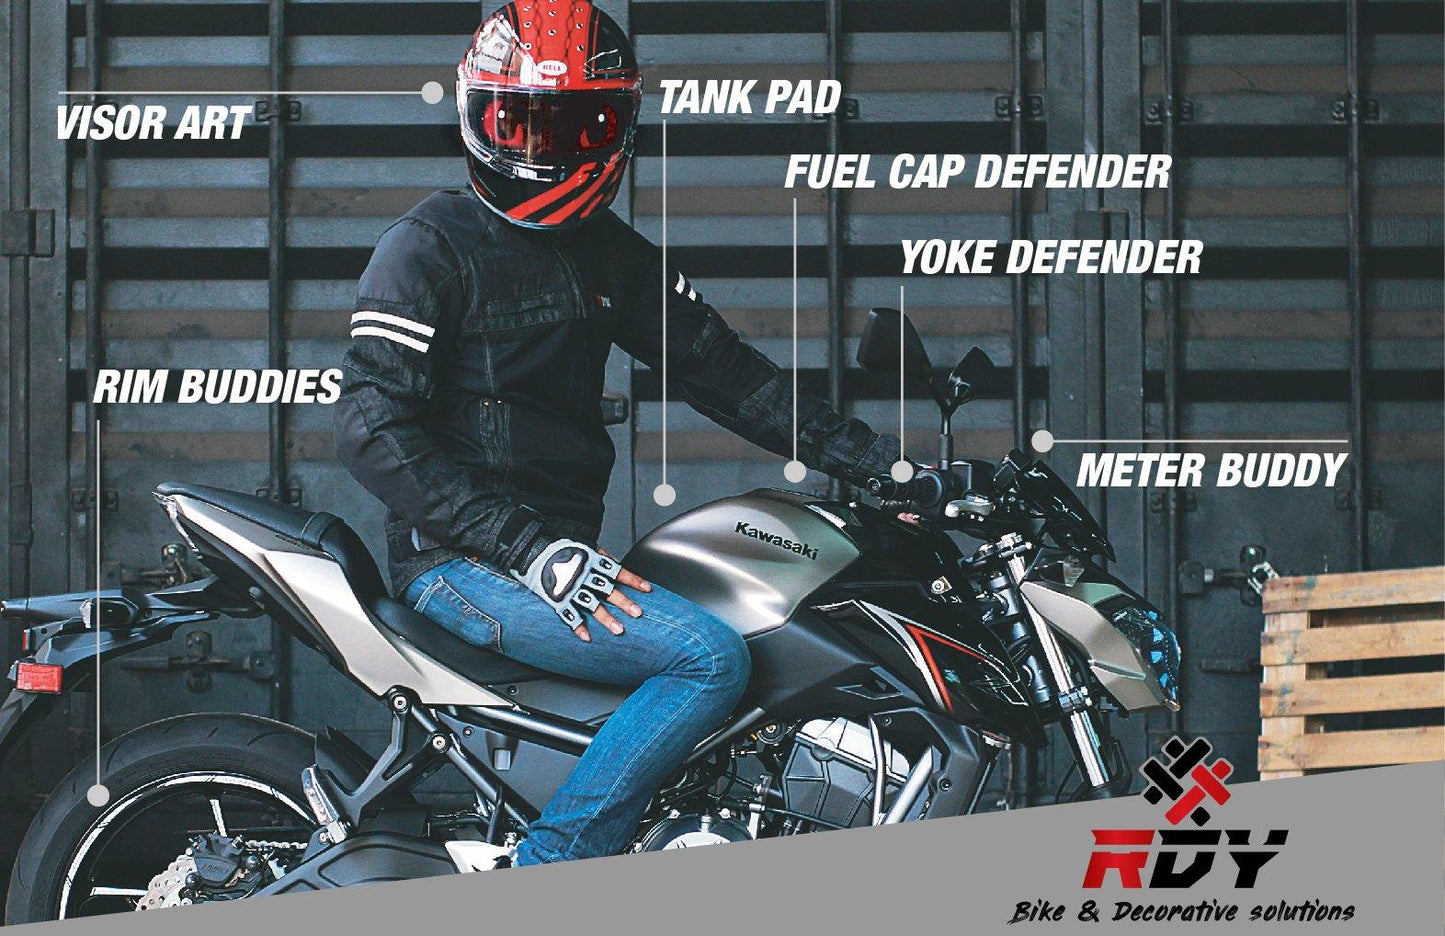 RDY Yoke Defender fits for Honda VFR 800 ('02-'06) - Durian Bikers